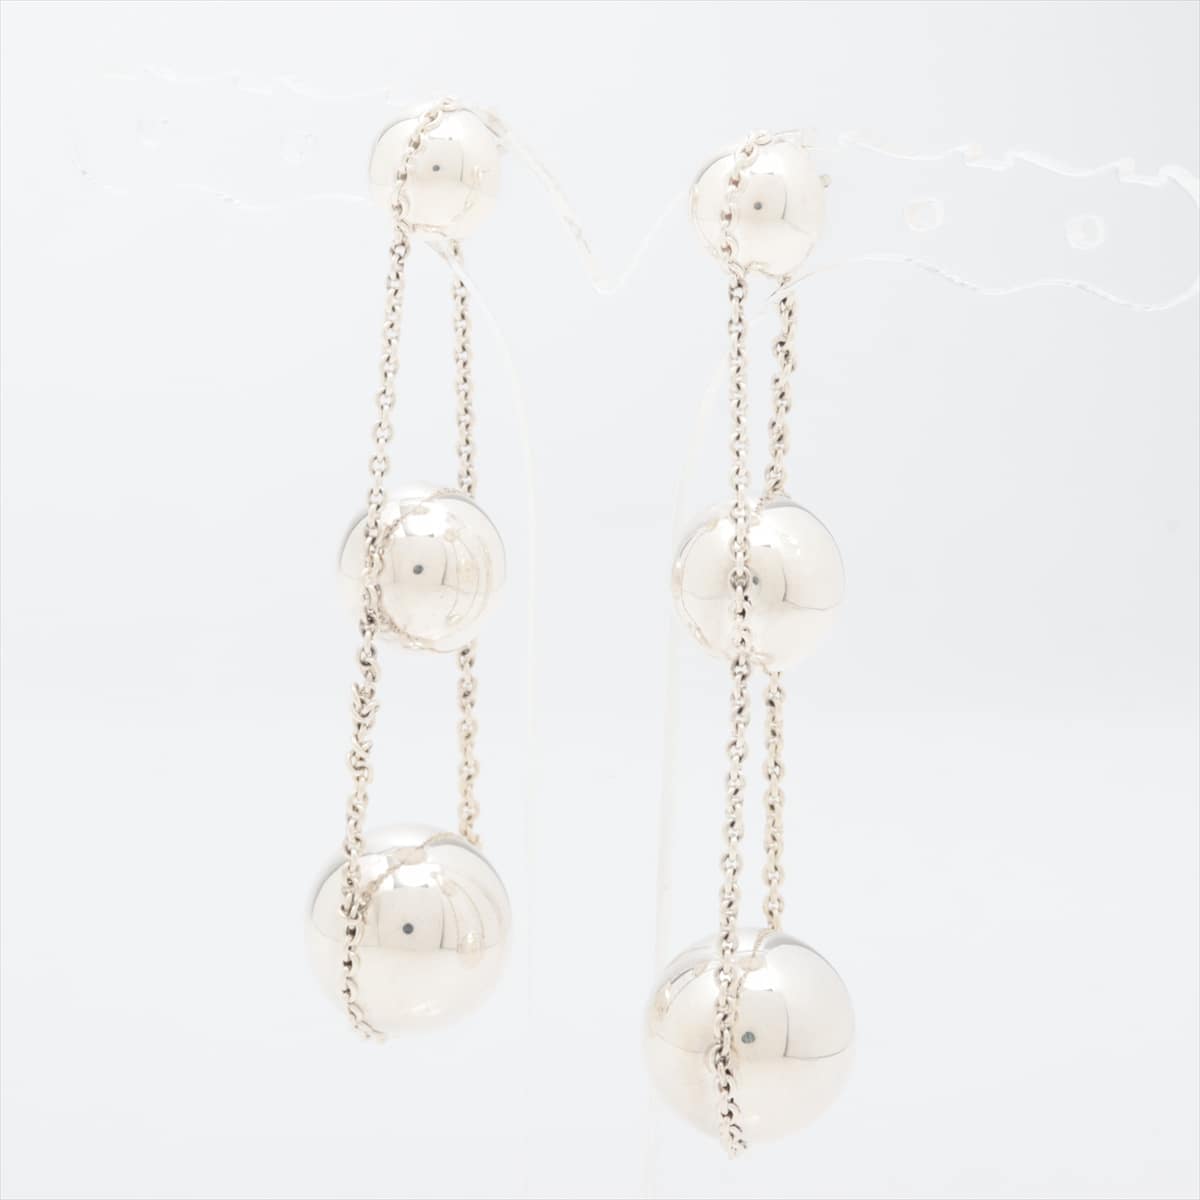 Tiffany hardware ball triple drop Piercing jewelry (for both ears) 925 12.5g Silver